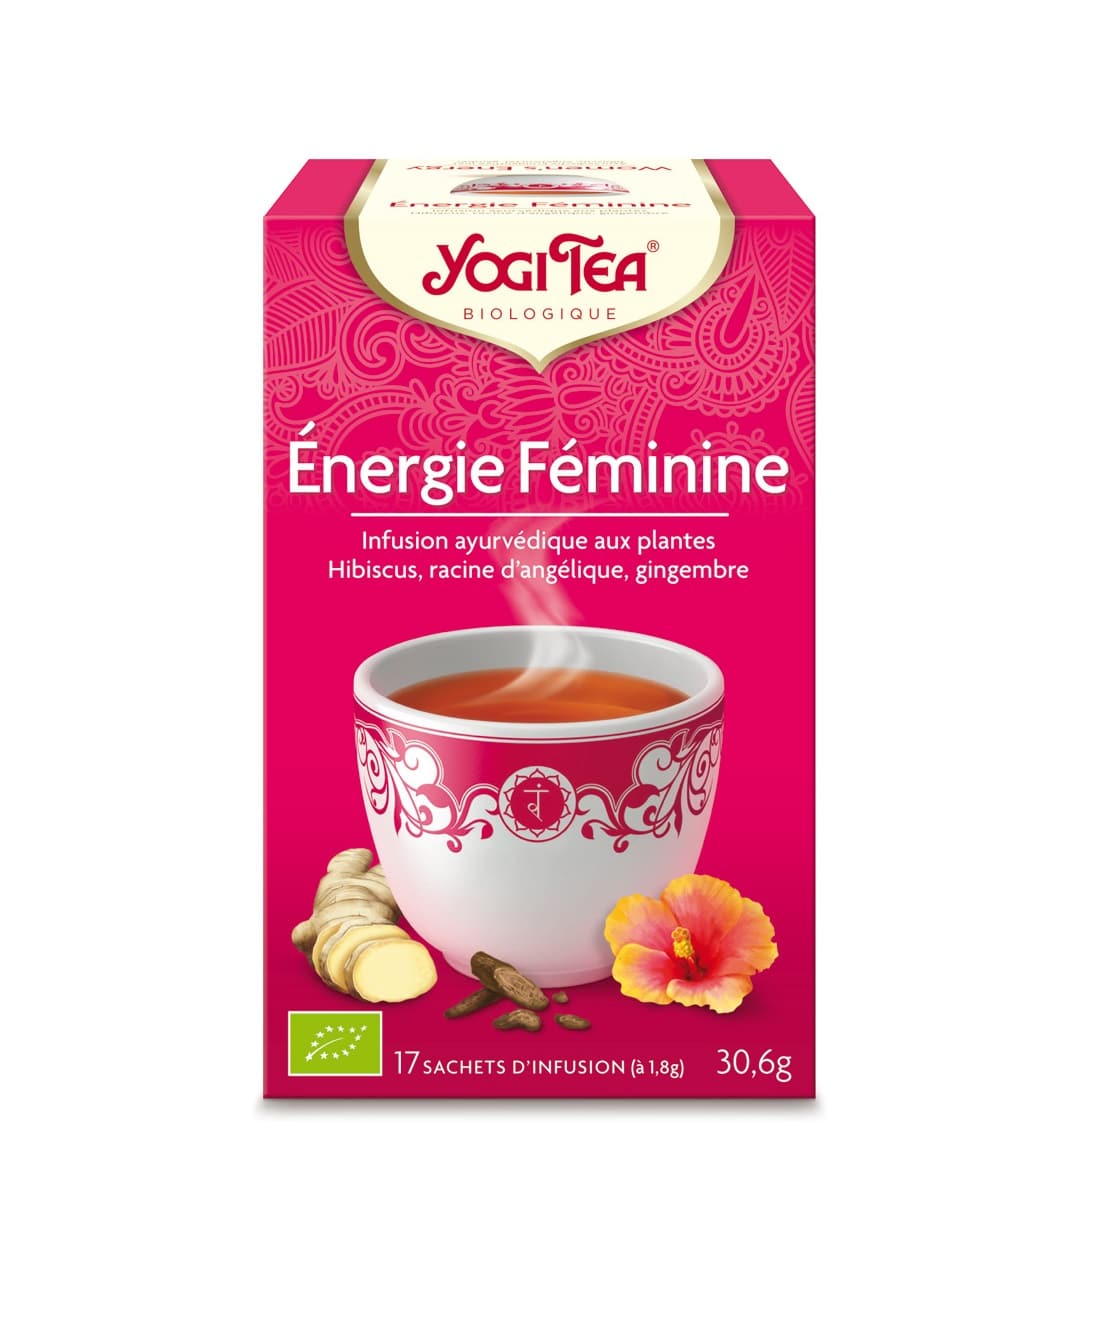 https://www.bebemaman.ma/wp-content/uploads/2021/09/bebemaman-yogi-tea-Energie-Feminine-1.jpg